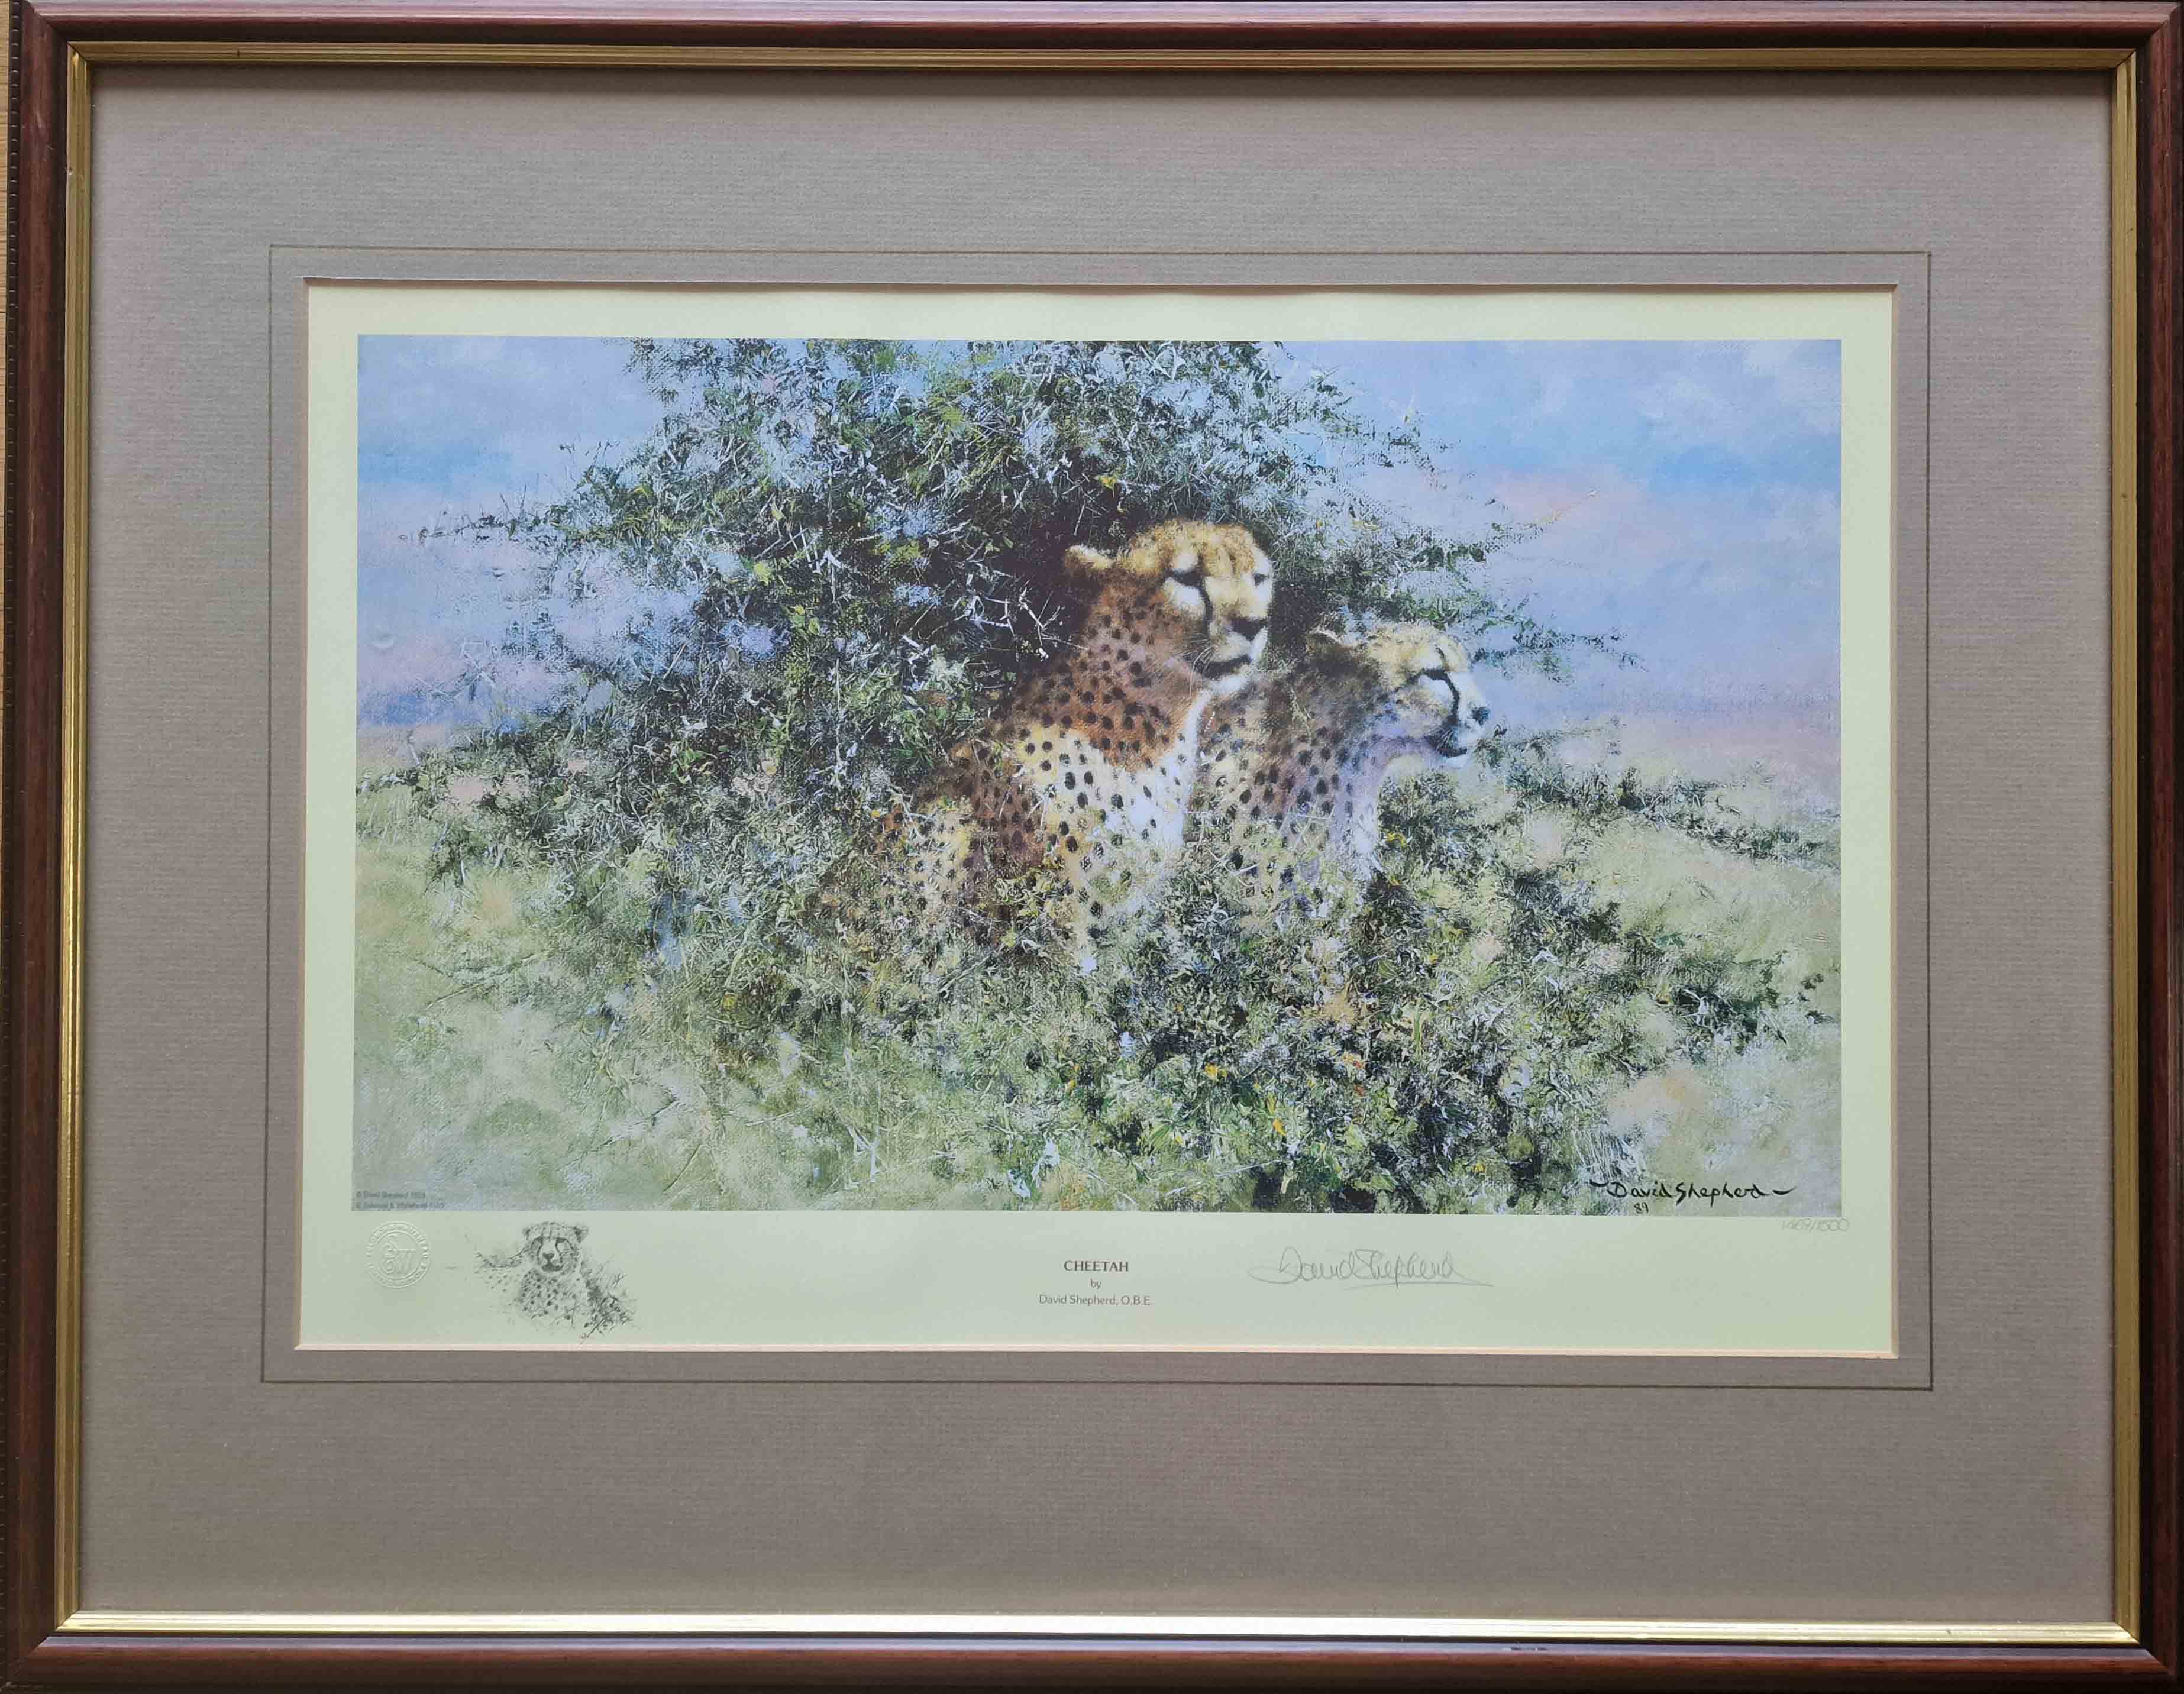 david shepherd cheetah, print framed